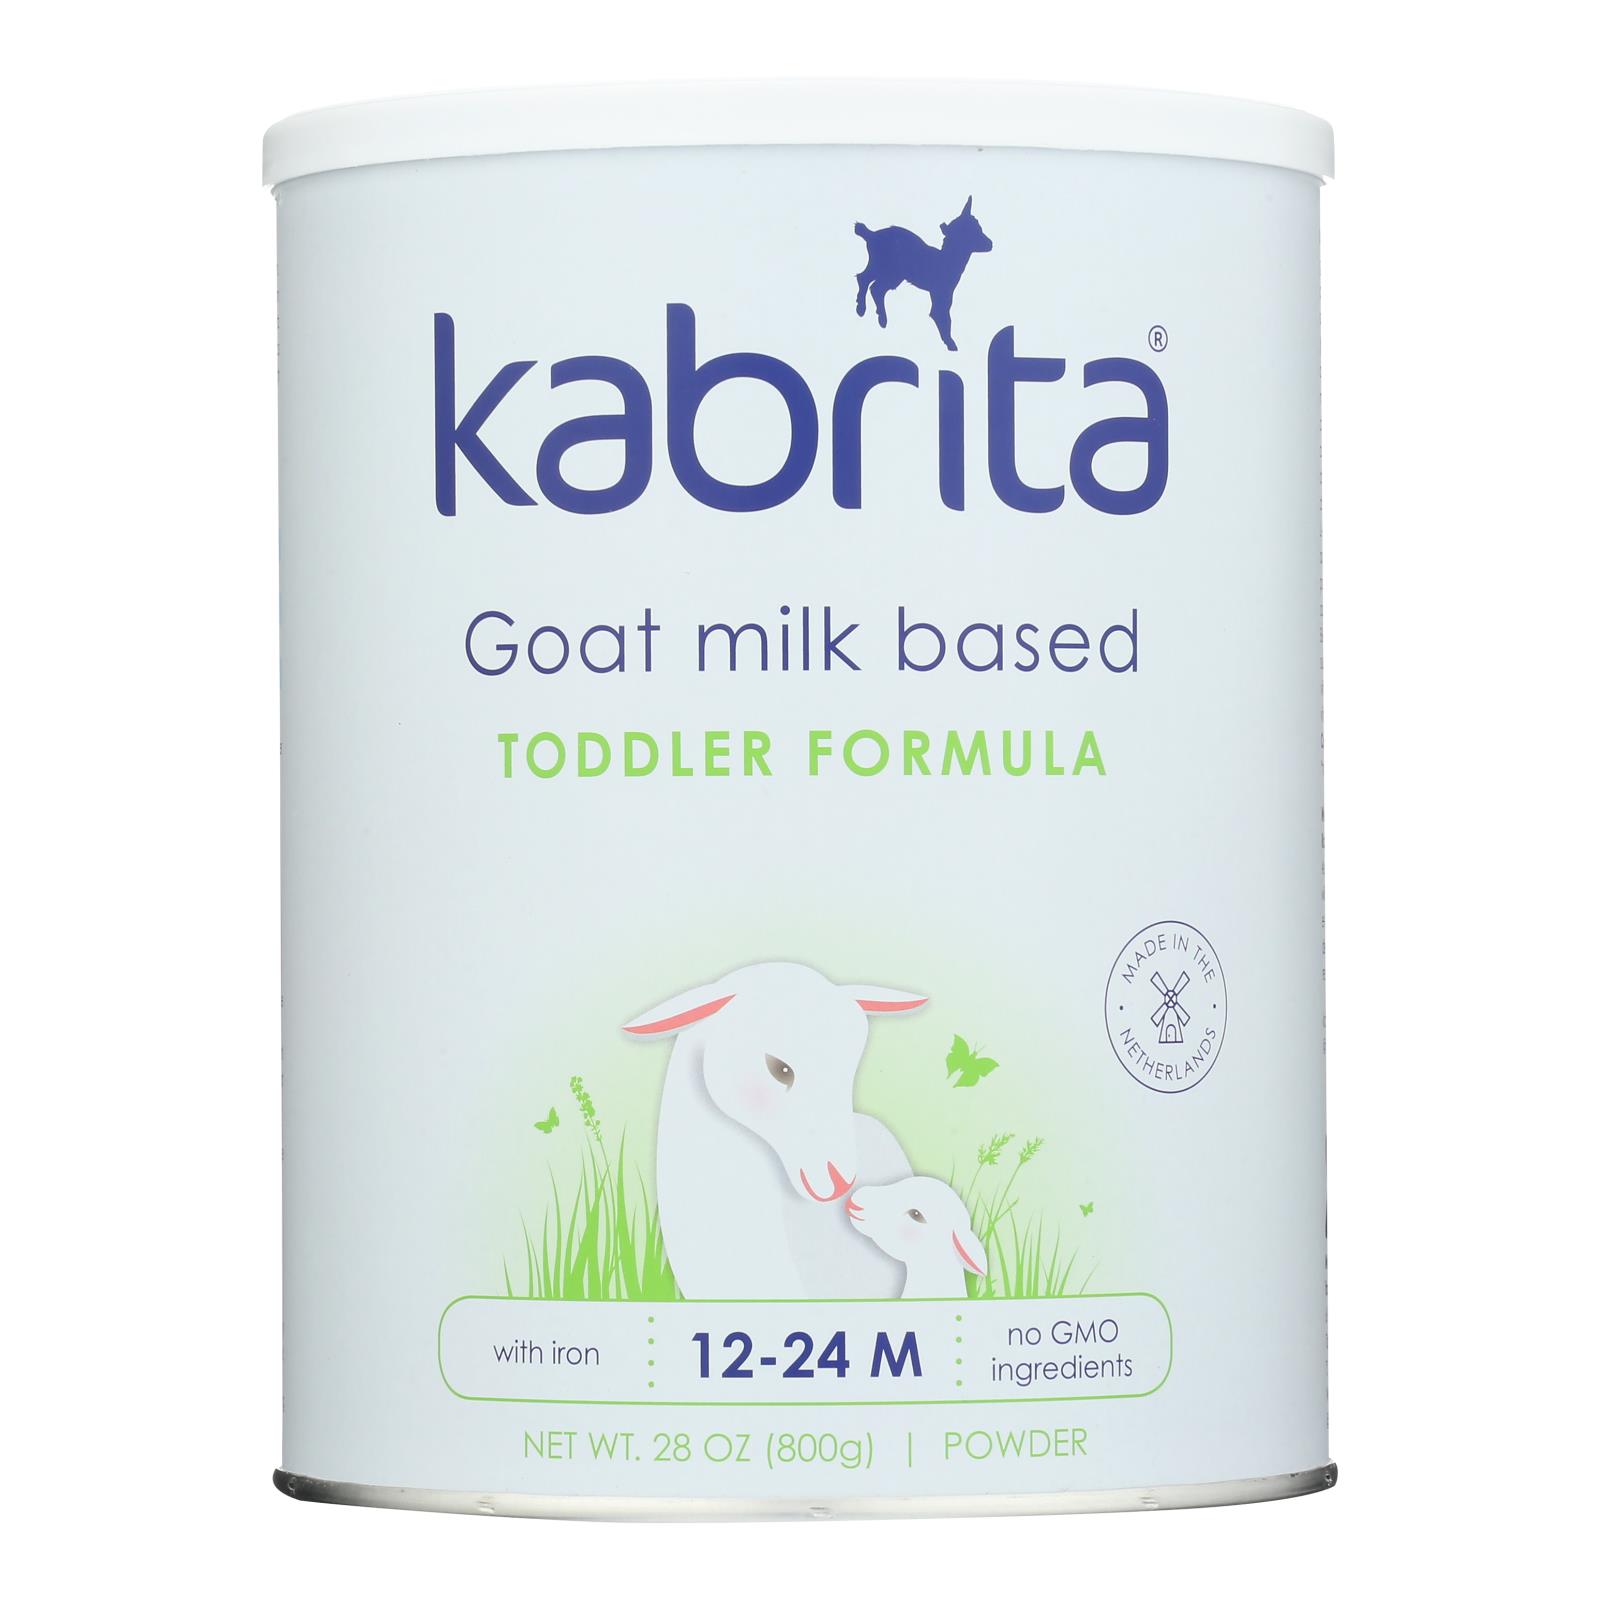 Kabrita Goat Milk Toddler Formula - 12-24 Months - 6개 묶음상품 - 28 oz